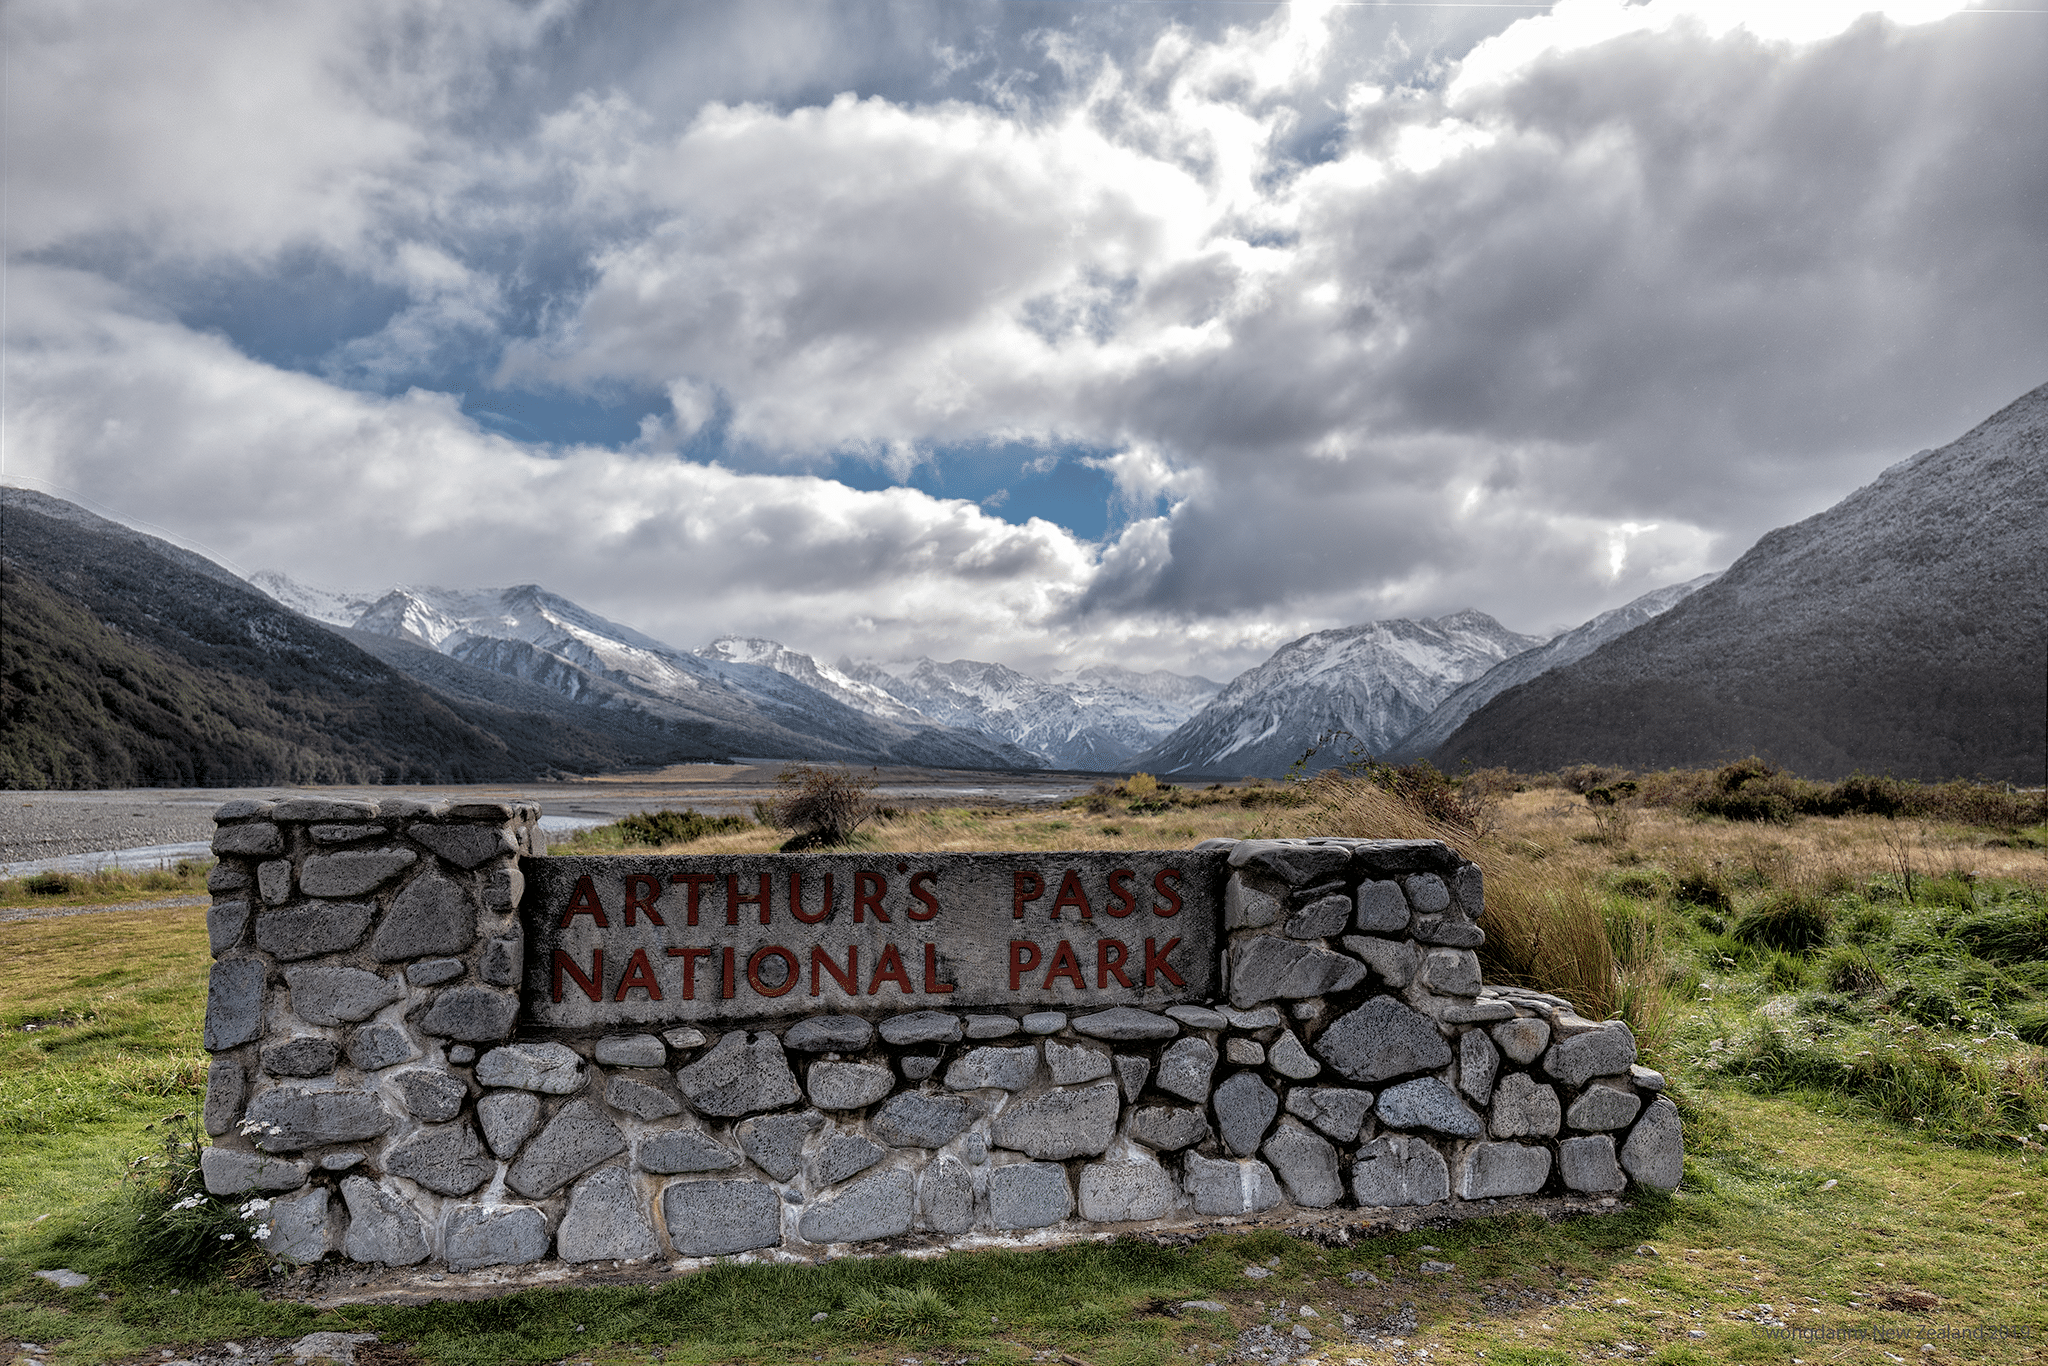 Arthur's Pass National Park Overview